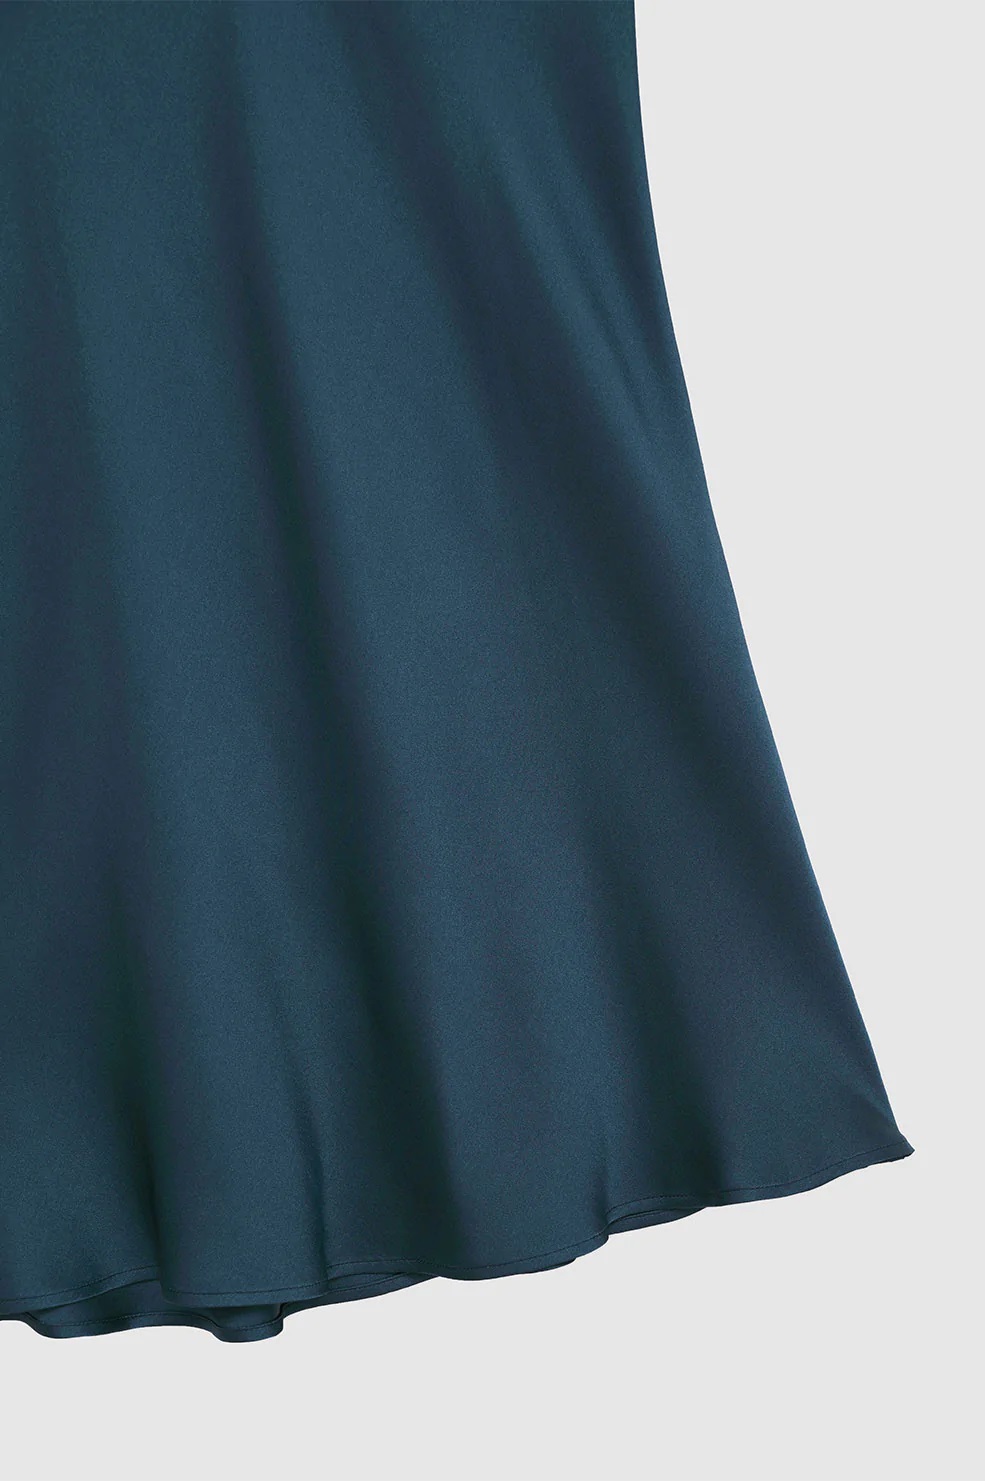 Anine Bing Bar Silk Skirt in Steel Blue XS